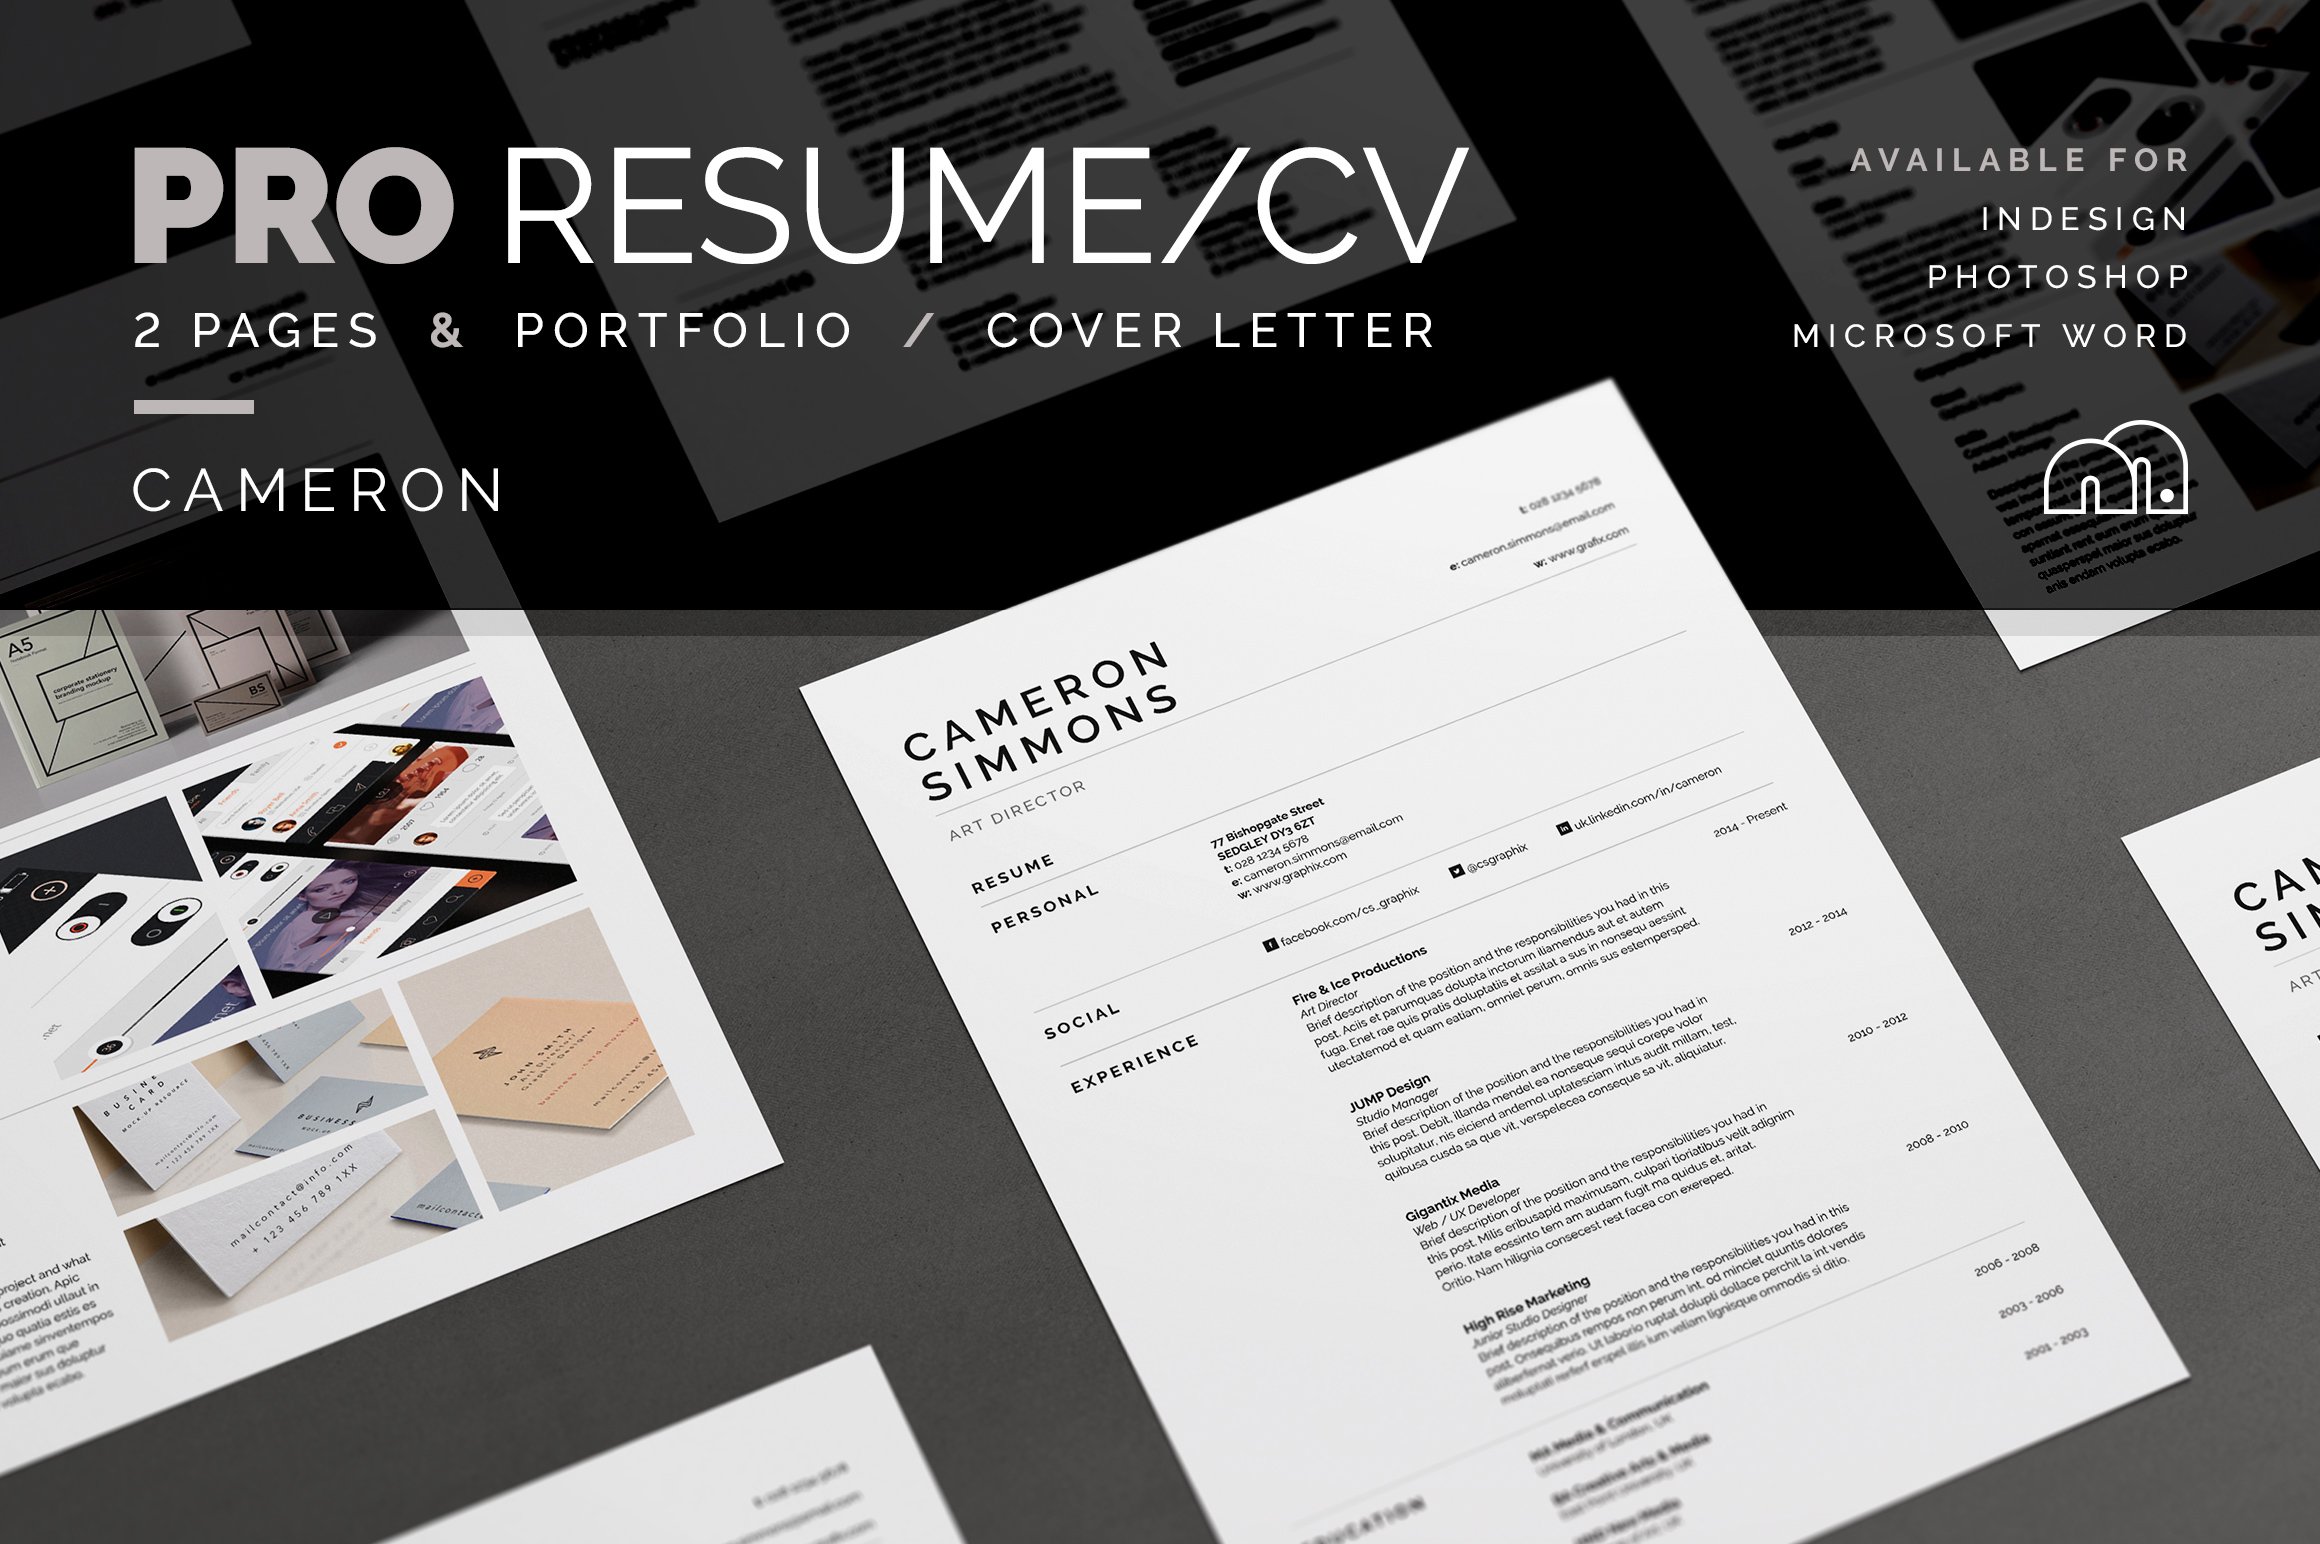 Pro Resume/CV - Cameron cover image.